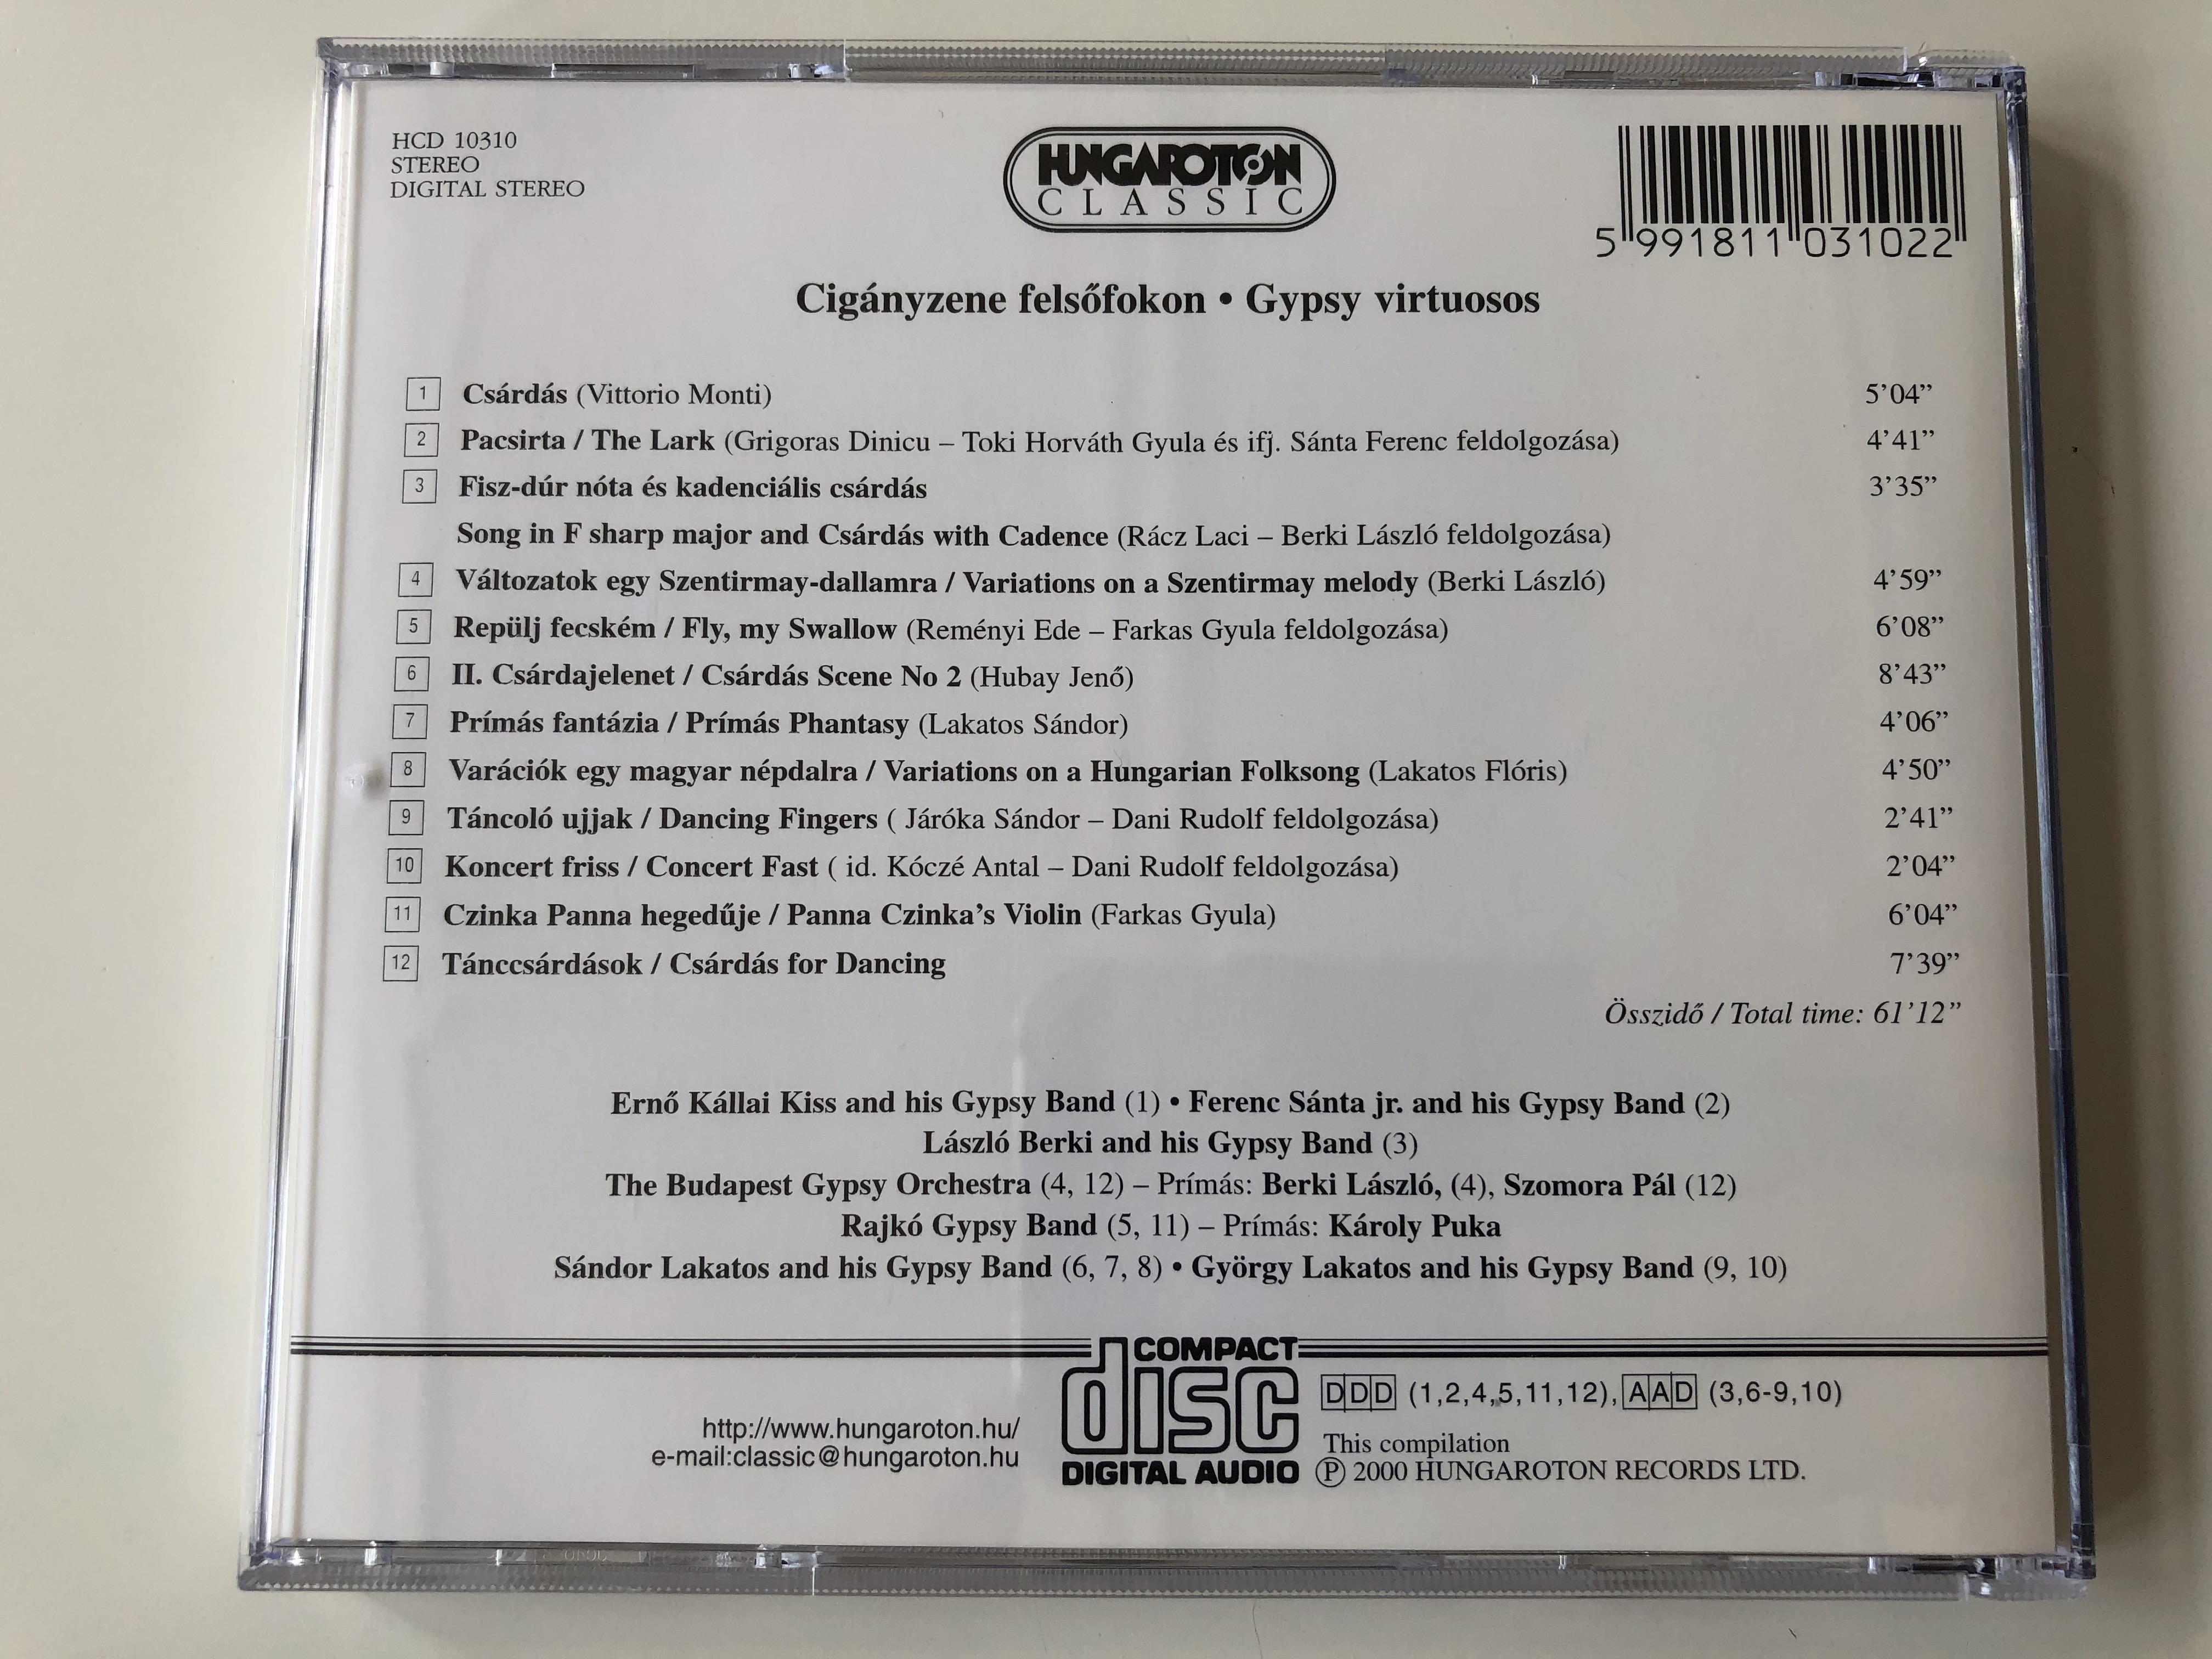 ciganyzene-felsofokon-gypsy-virtuosos-erno-kallai-kiss-jr.-ferenc-santa-jr.-laszlo-berki-karoly-puka-sandor-lakatos-gyorgy-lakatos-pal-szomora-hungaroton-classic-audio-cd-2000-stereo-4-.jpg